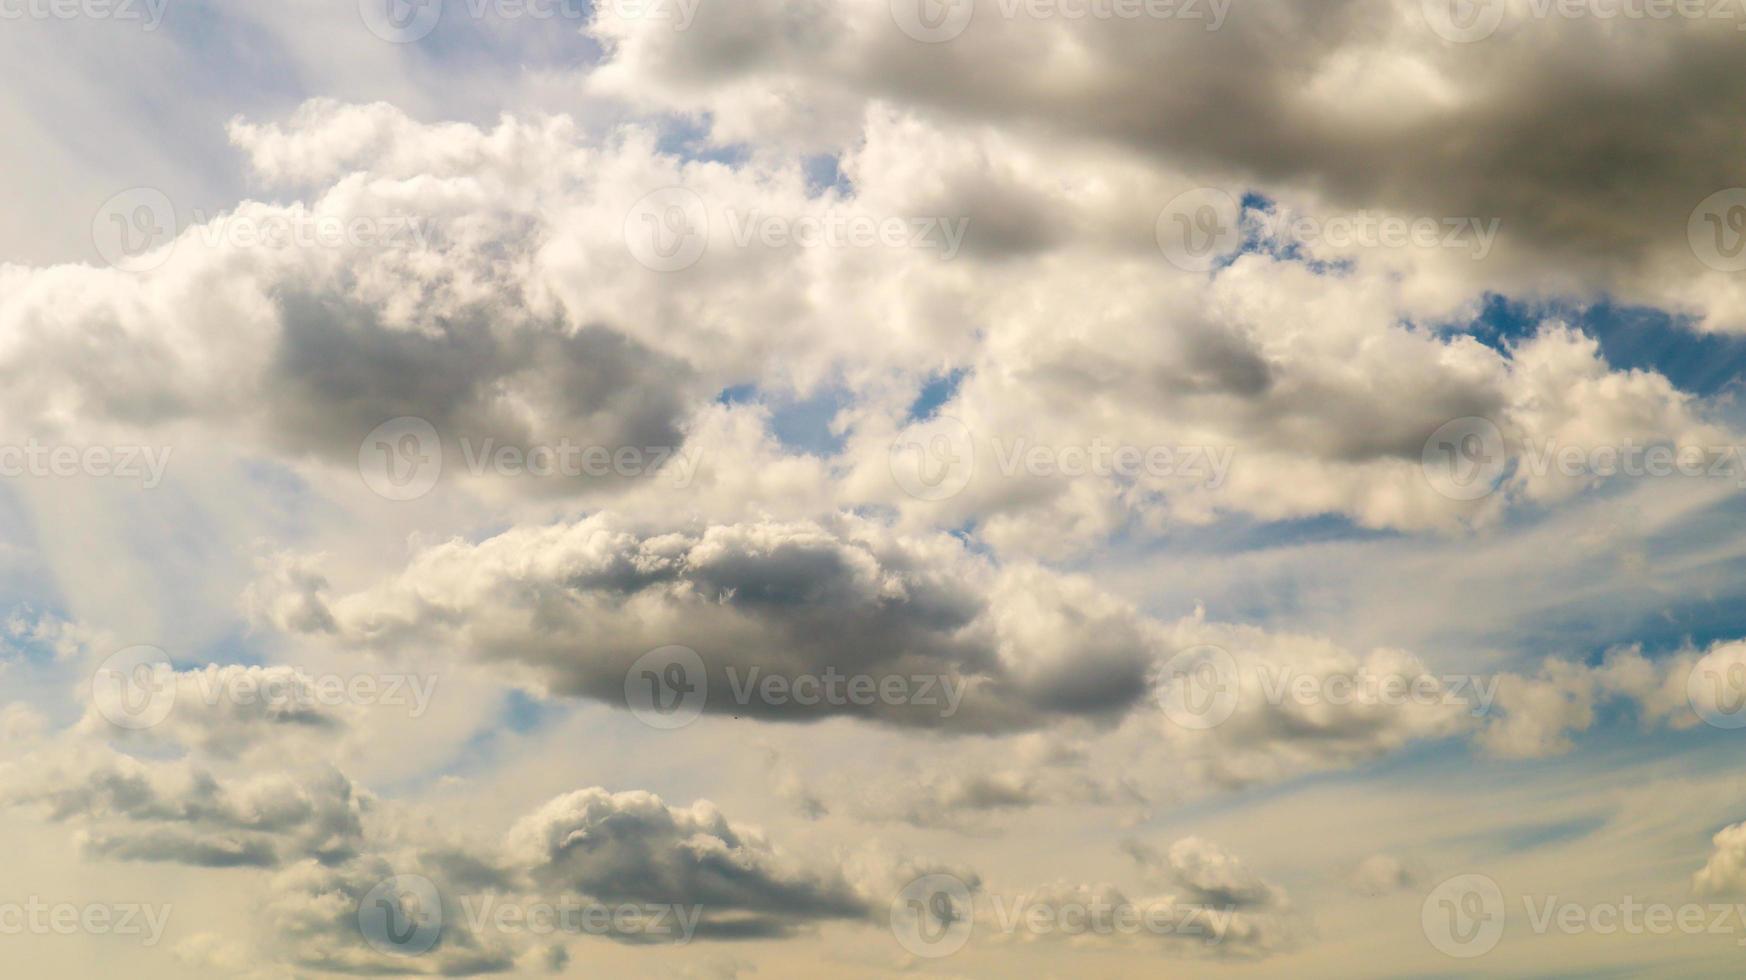 blauwe lucht met witte pluizige wolken en zon. stapelwolken. natuur weer blauwe lucht. mooie achtergrond witte wolken. foto